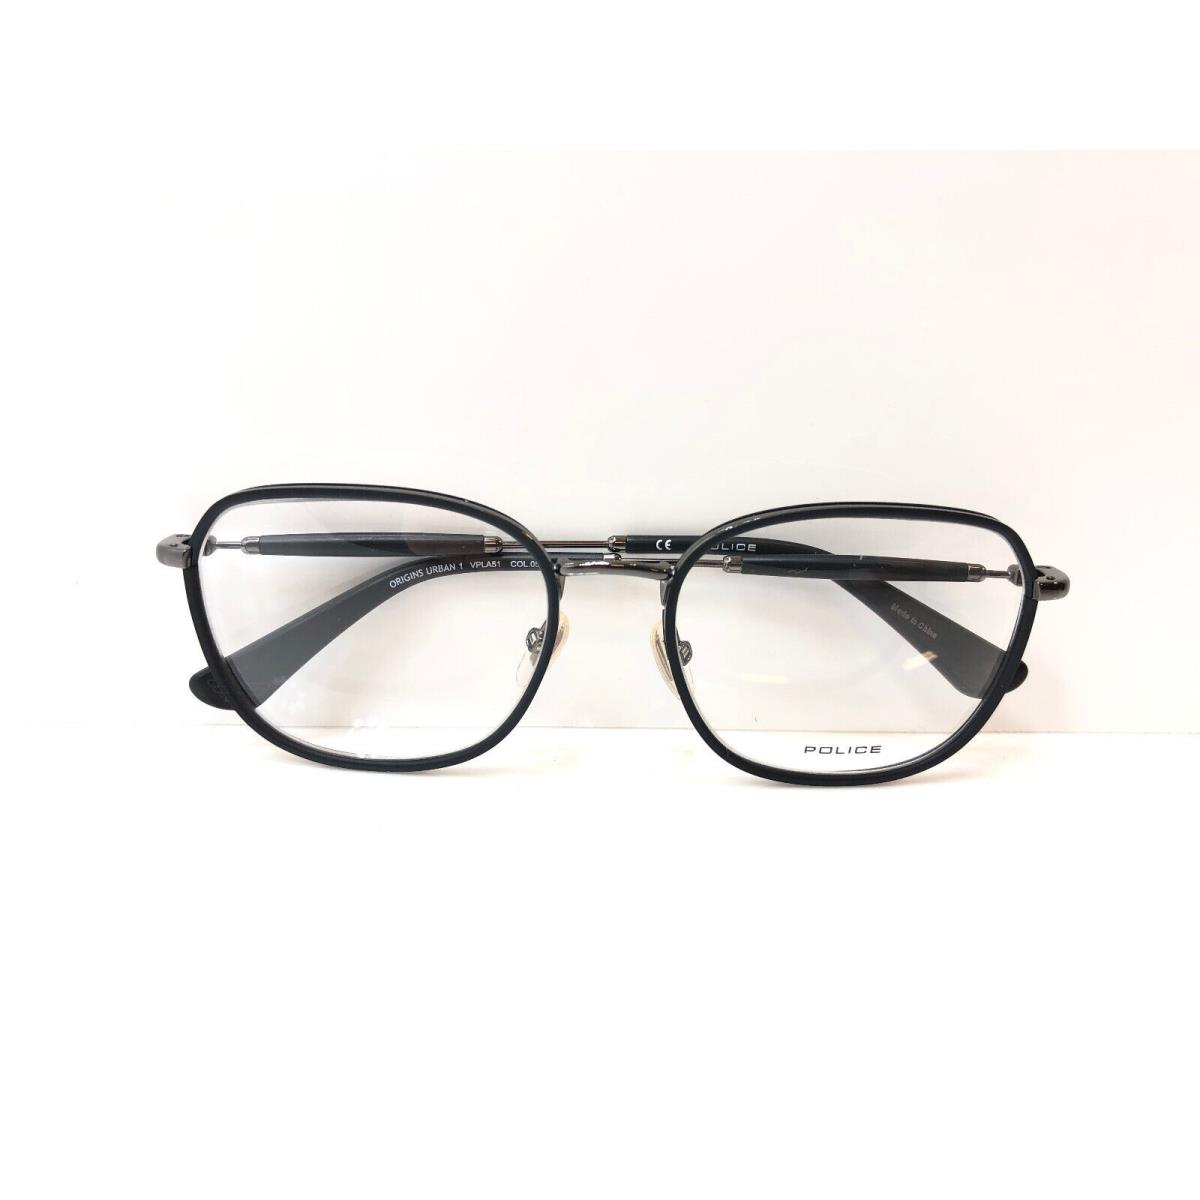 Police eyeglasses  - Black Frame 6